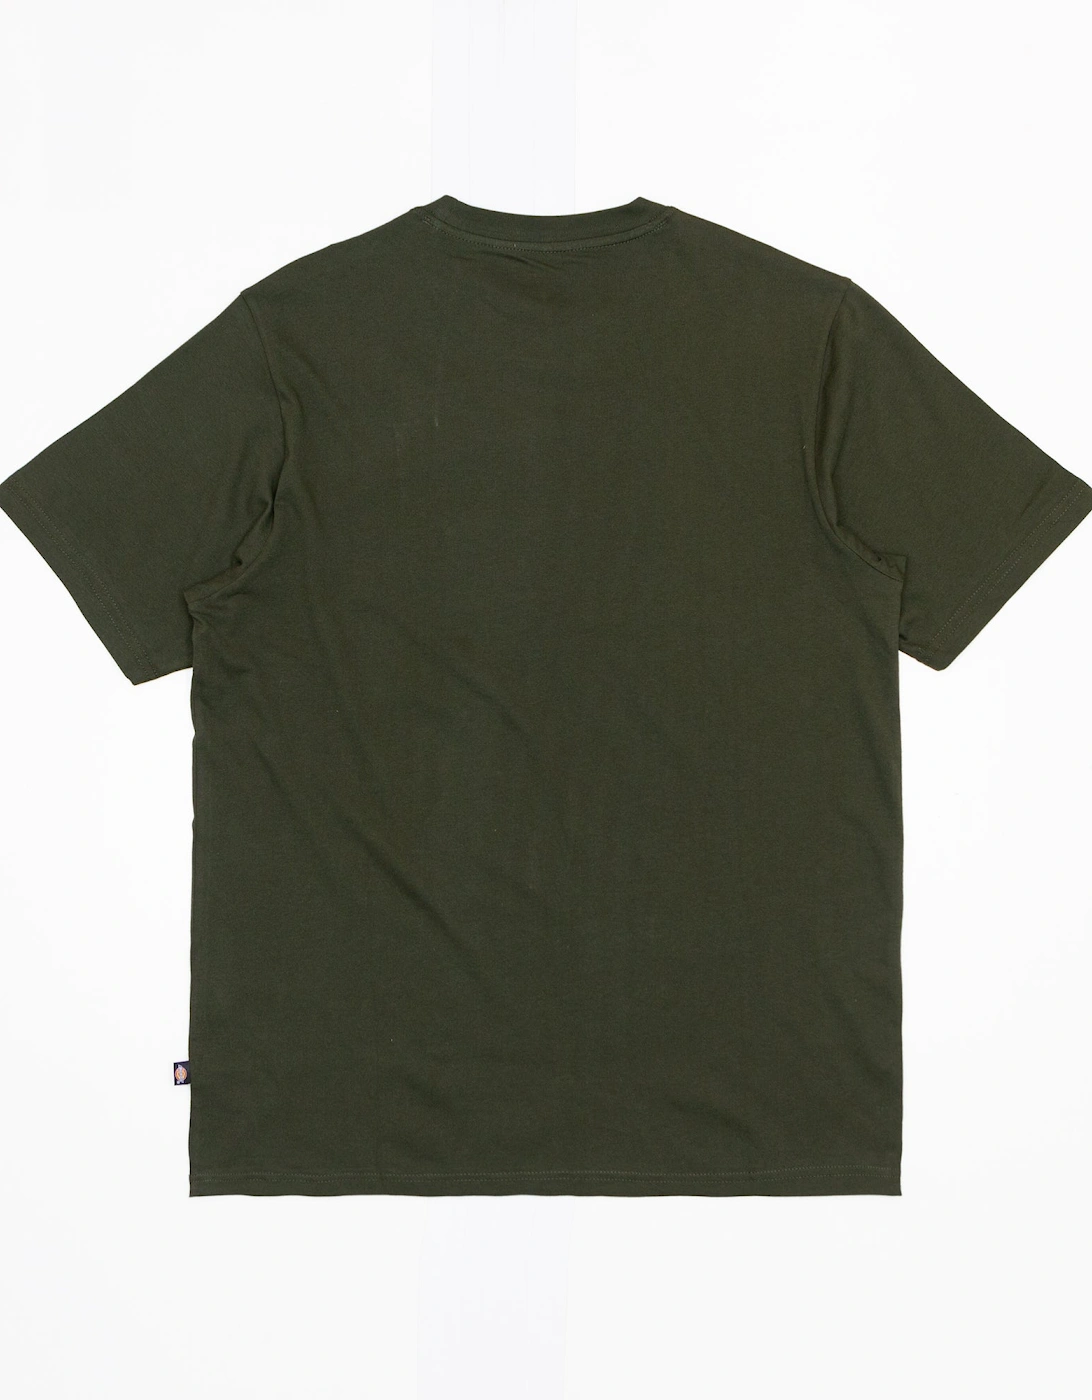 Mapleton T-Shirt - Olive Green